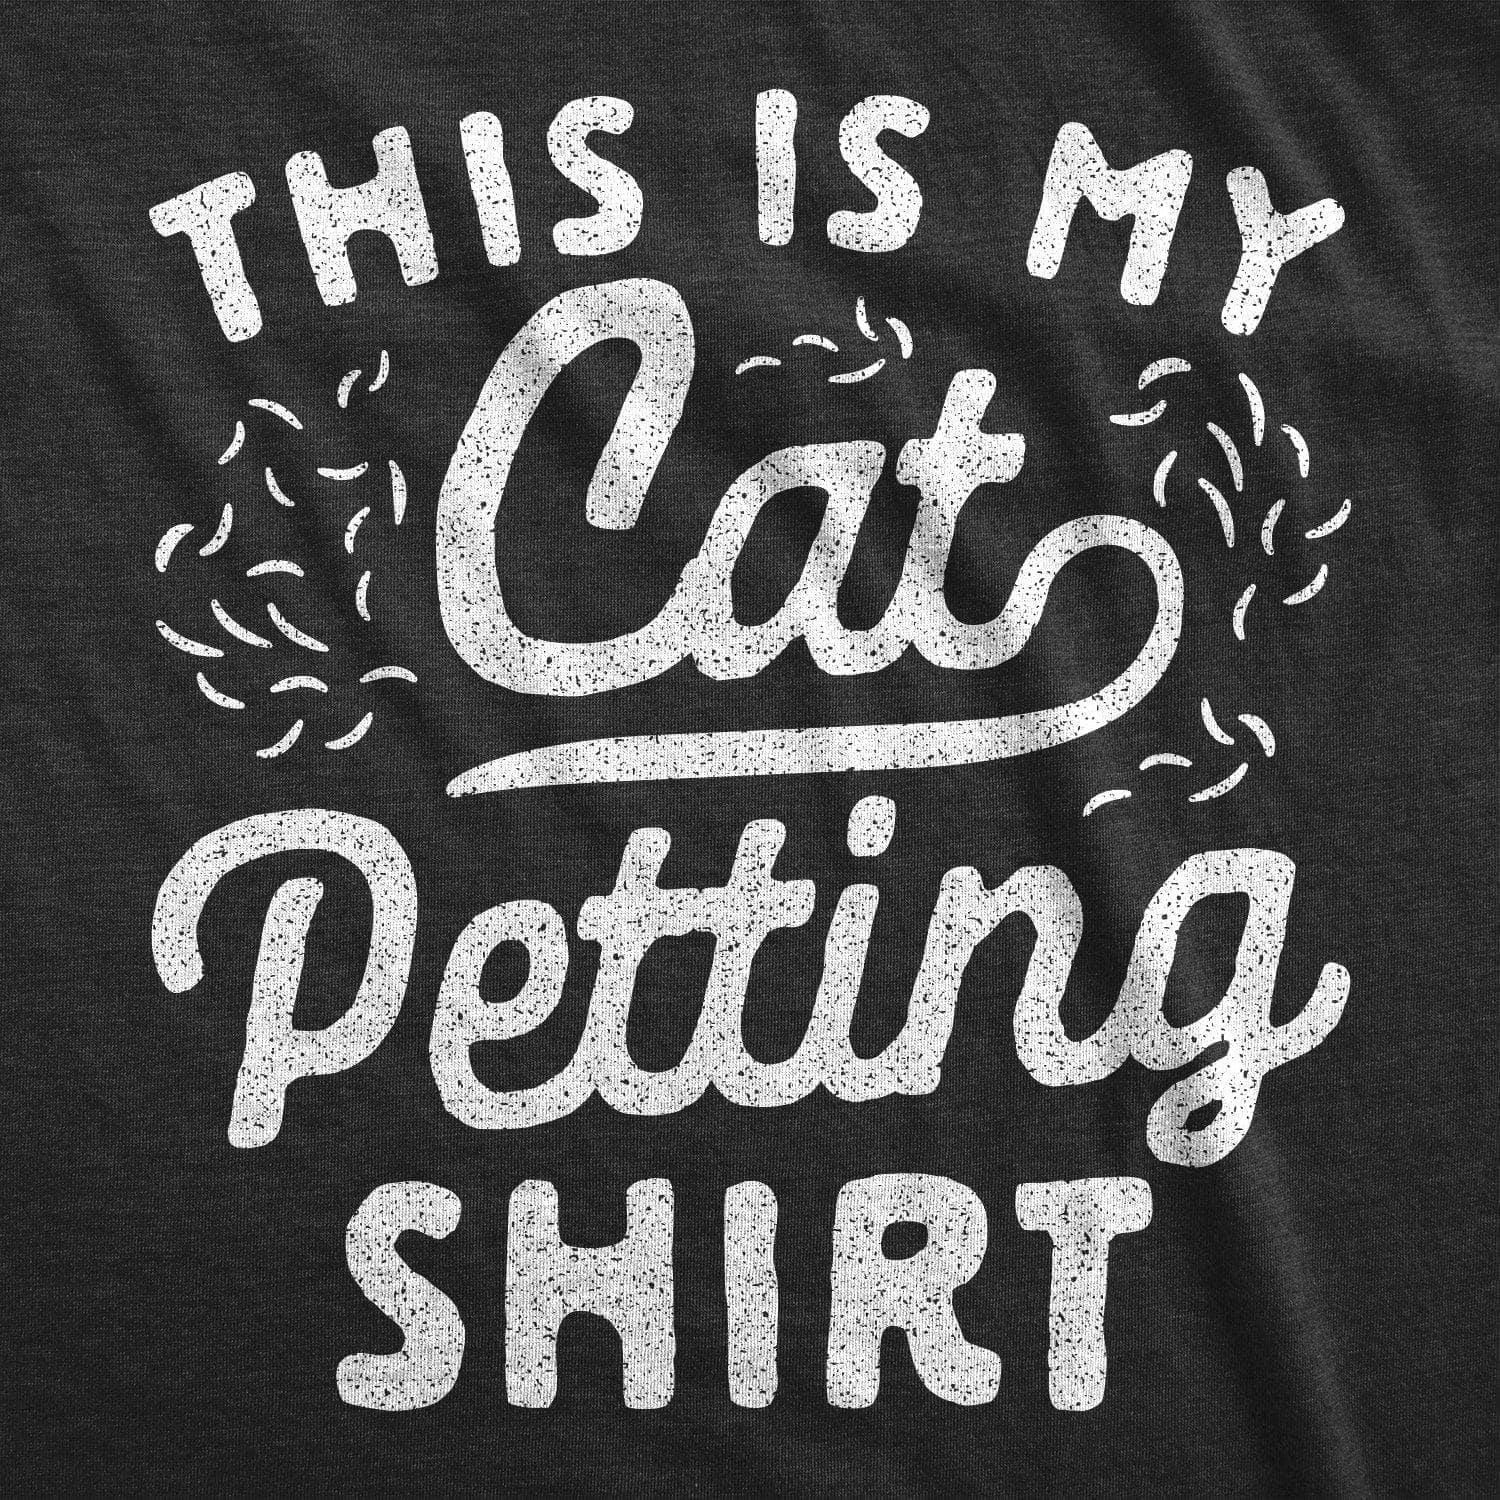 This Is My Cat Petting Shirt Men's Tshirt - Crazy Dog T-Shirts